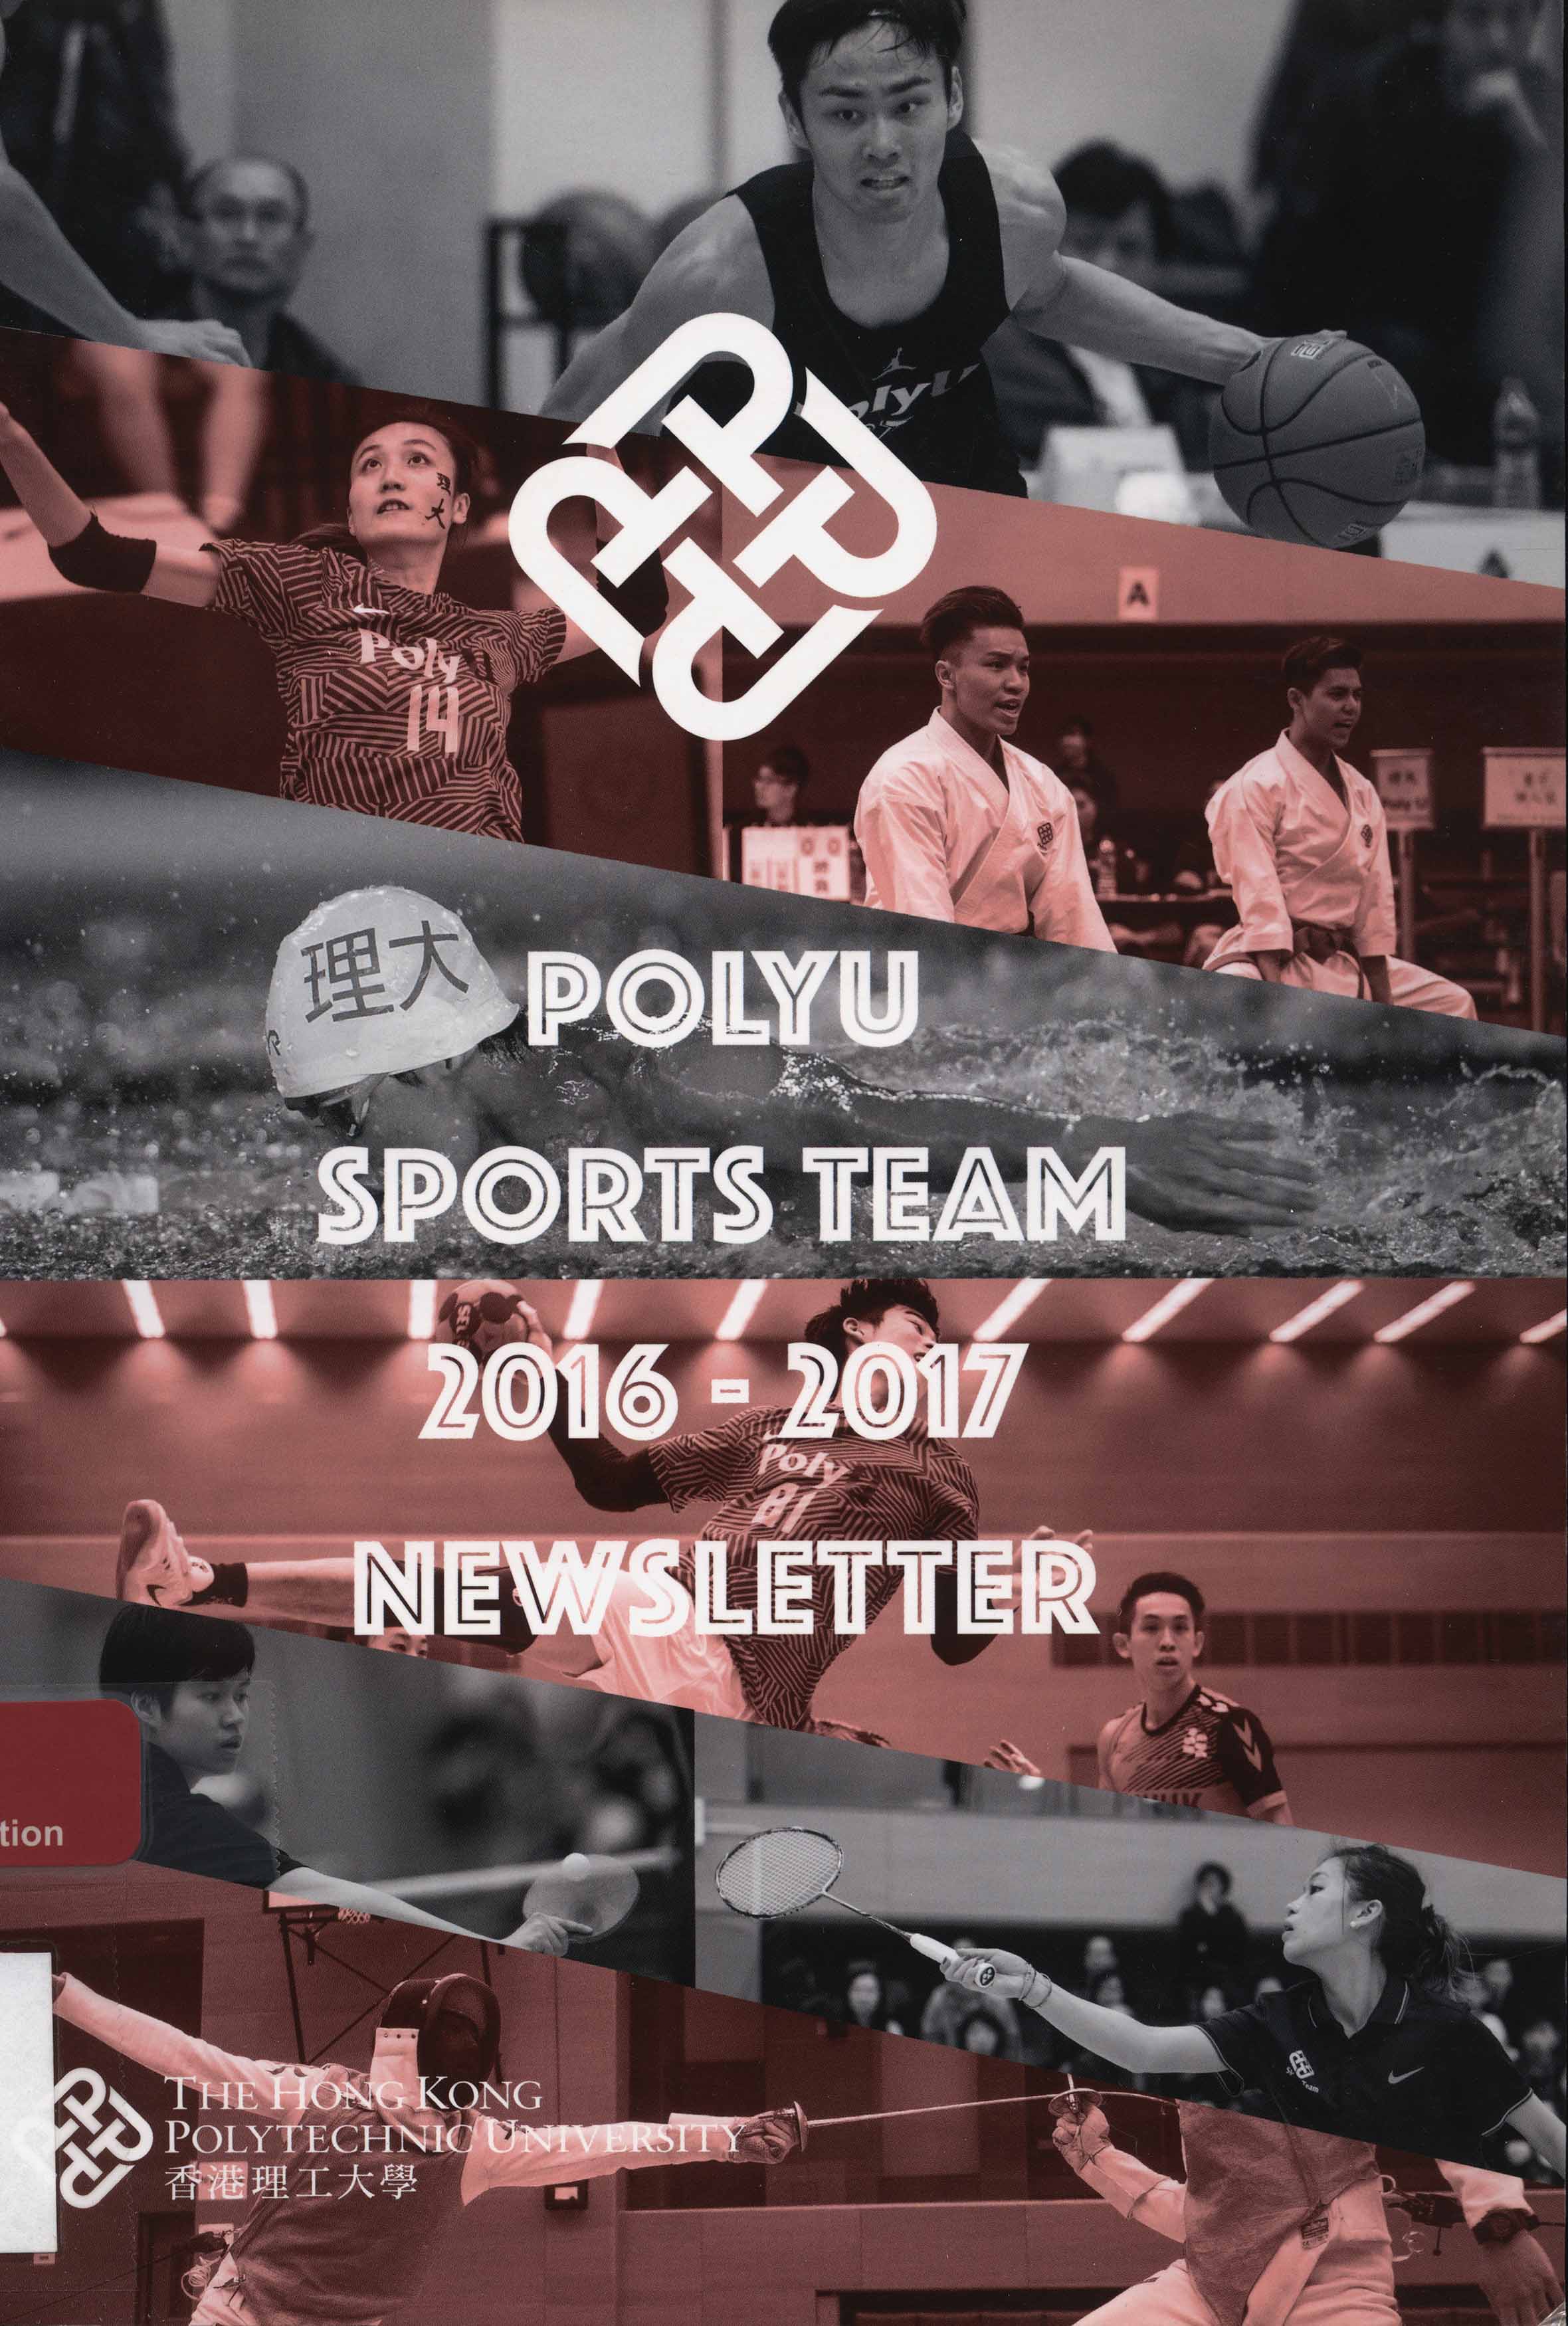 PolyU sports team newsletter. 2016/17